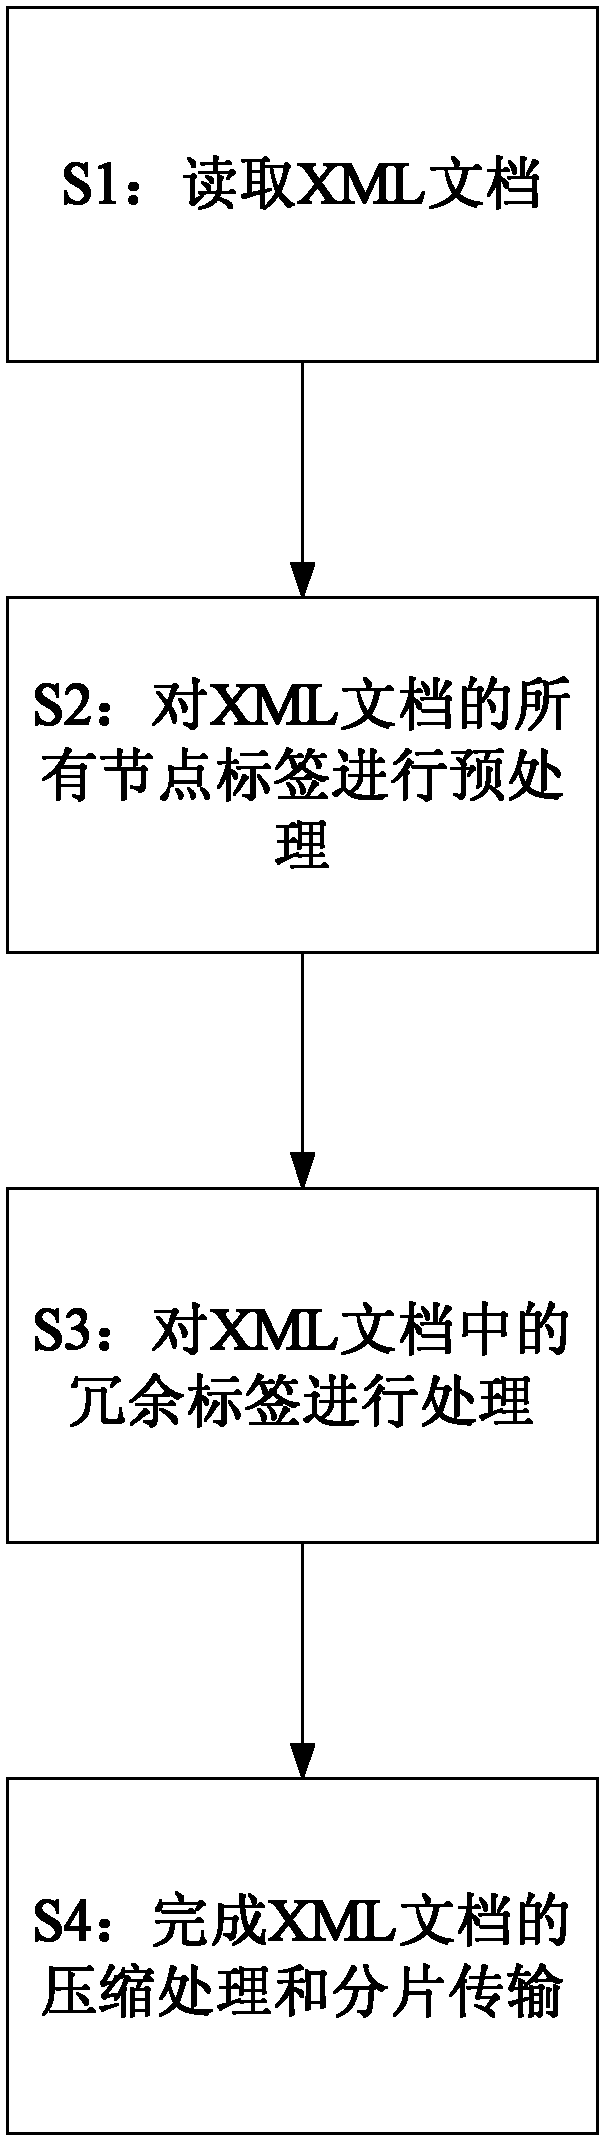 Network transmission method for large extensible markup language (XML) document